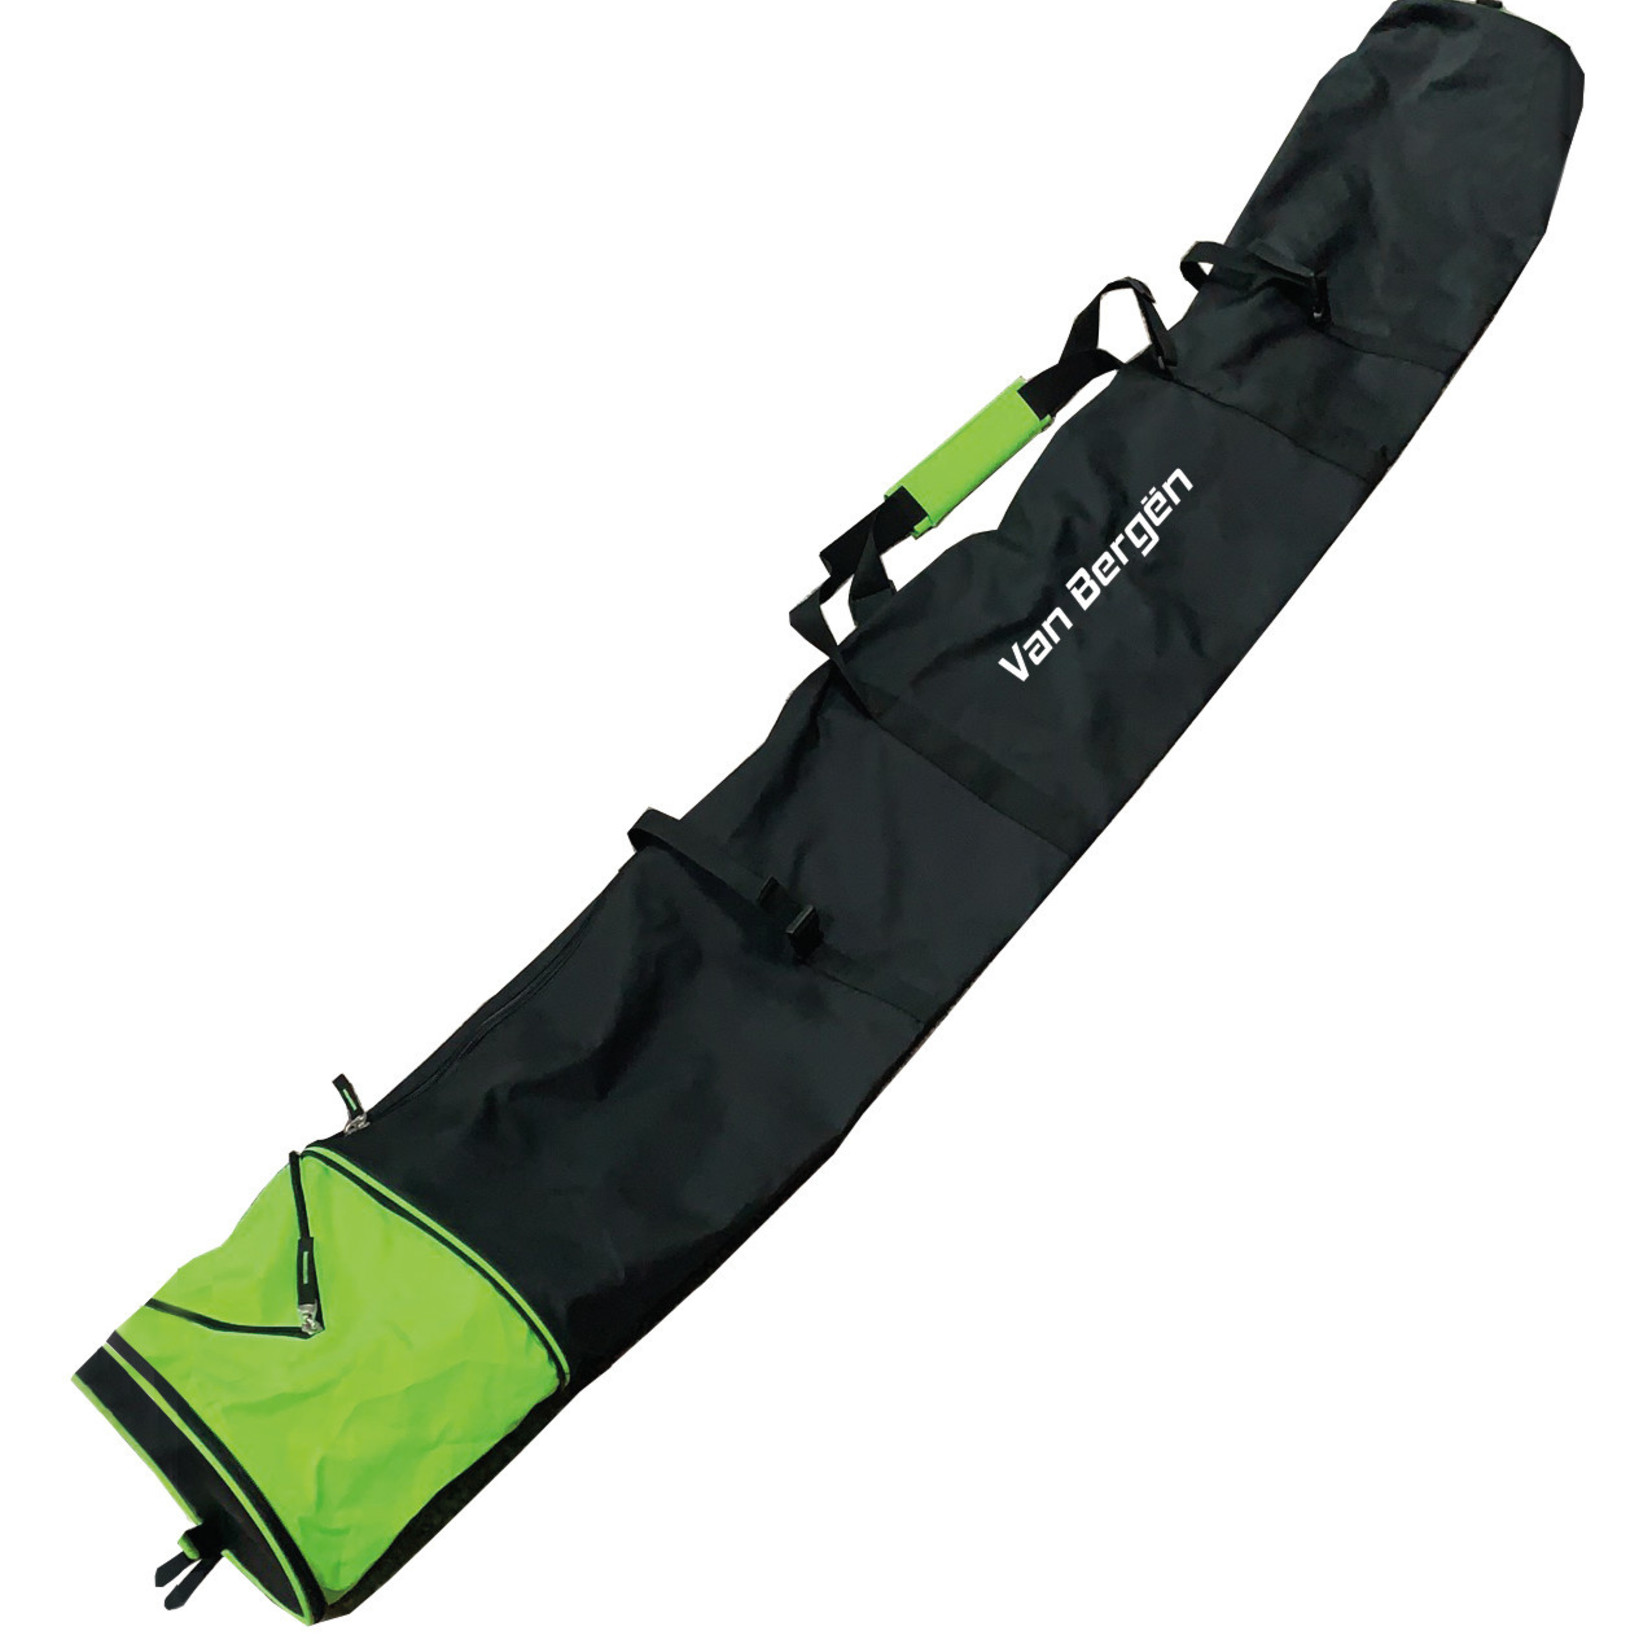 Berio Hiver Nordic Ski Bag Berio 180 to 210 cm